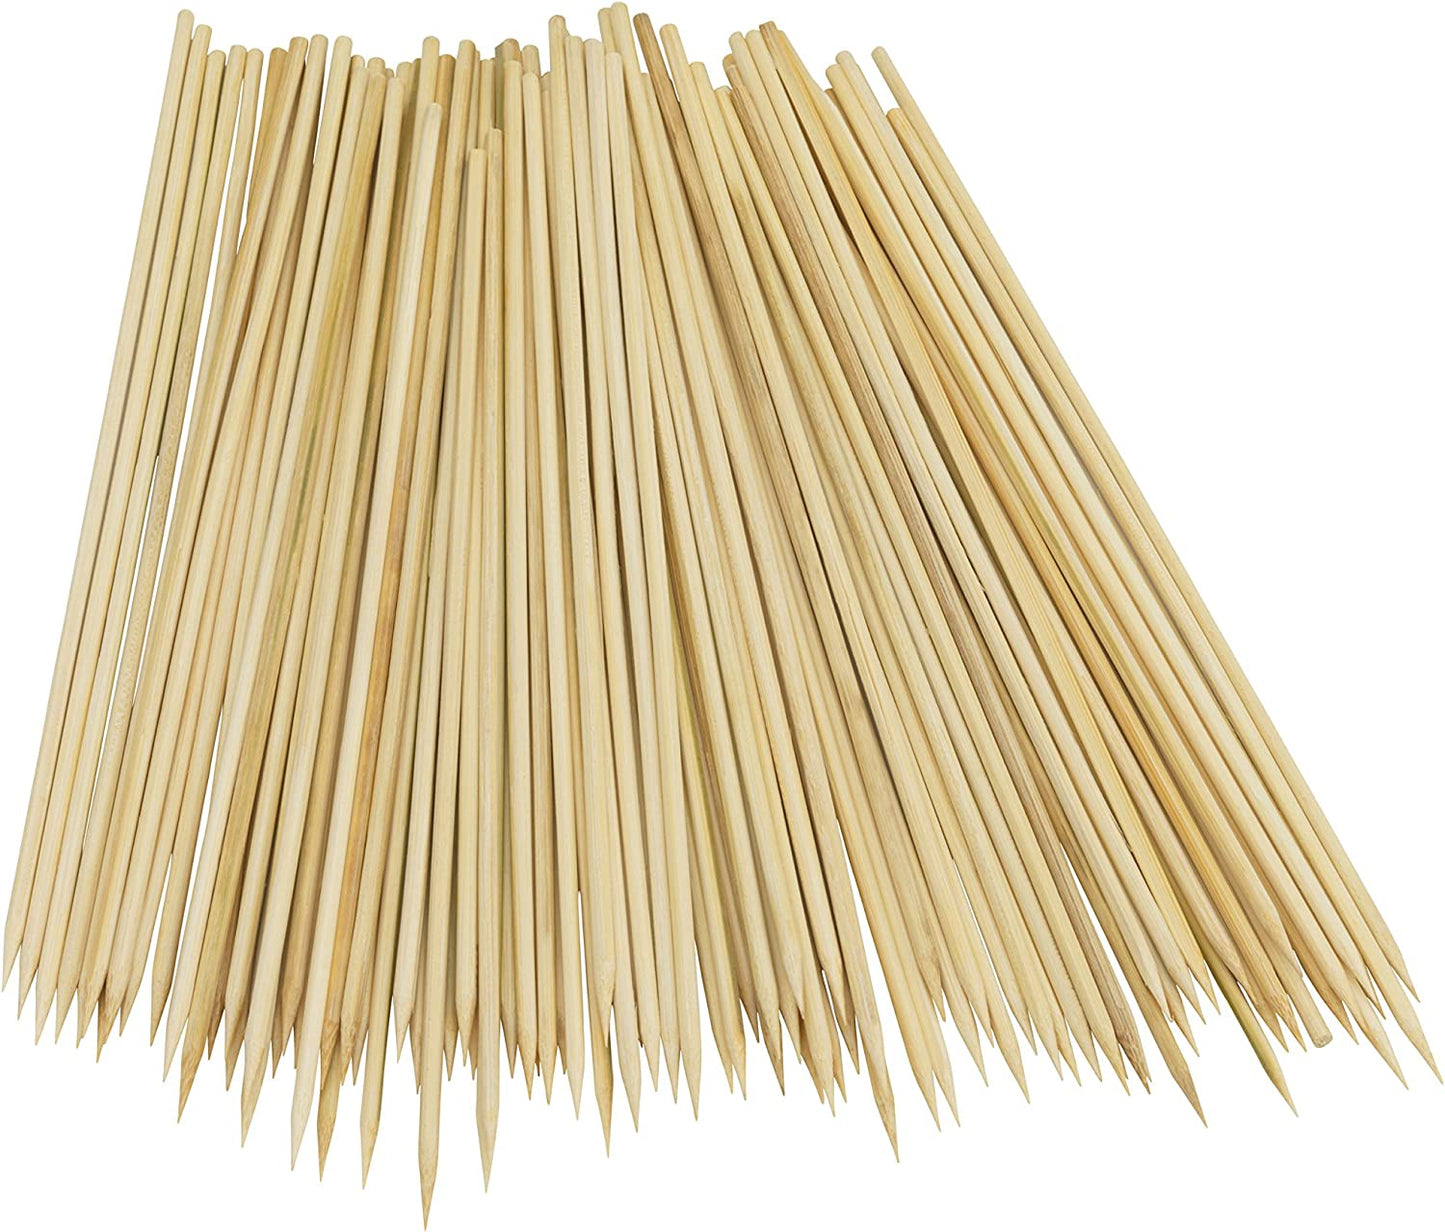 100pcs 12" Bamboo Skewers